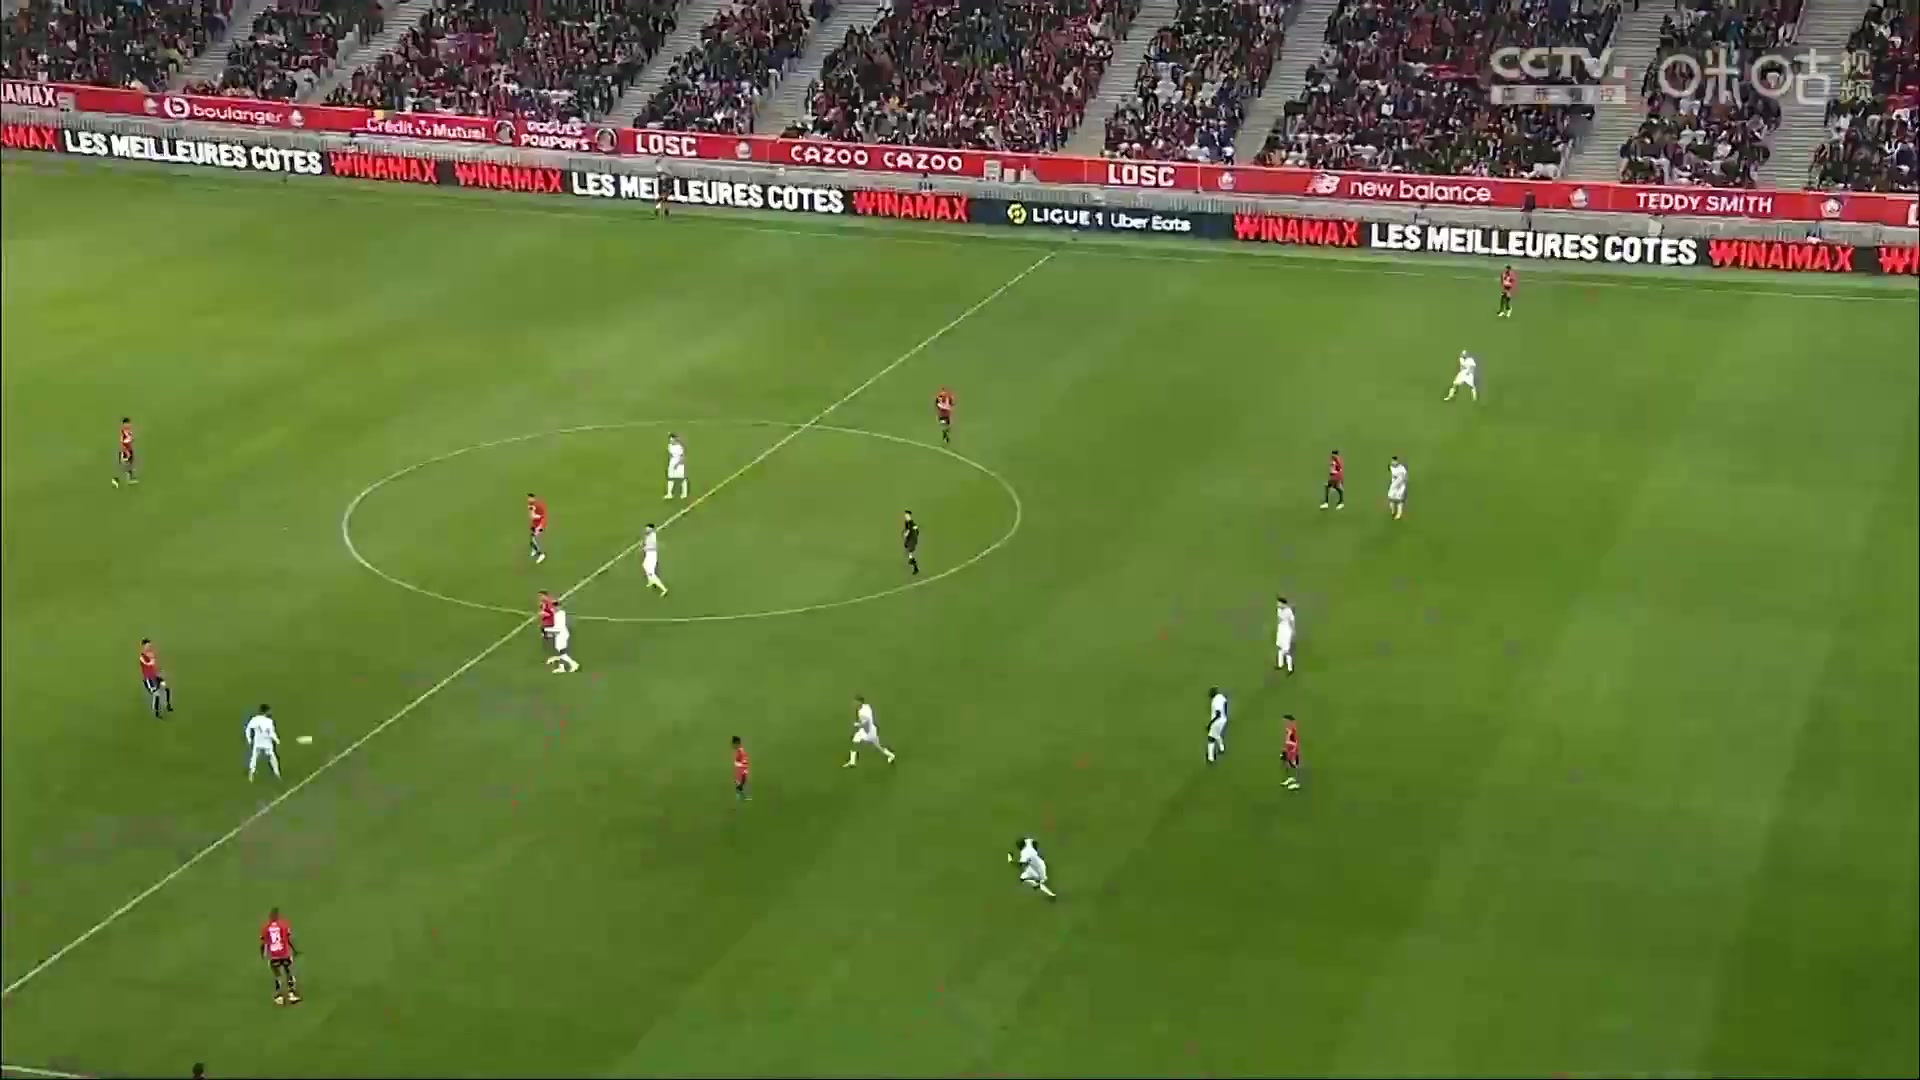 Ligue1 Lille Vs Toulouse Jonathan Christian David Goal in 3 min, Score 1:0